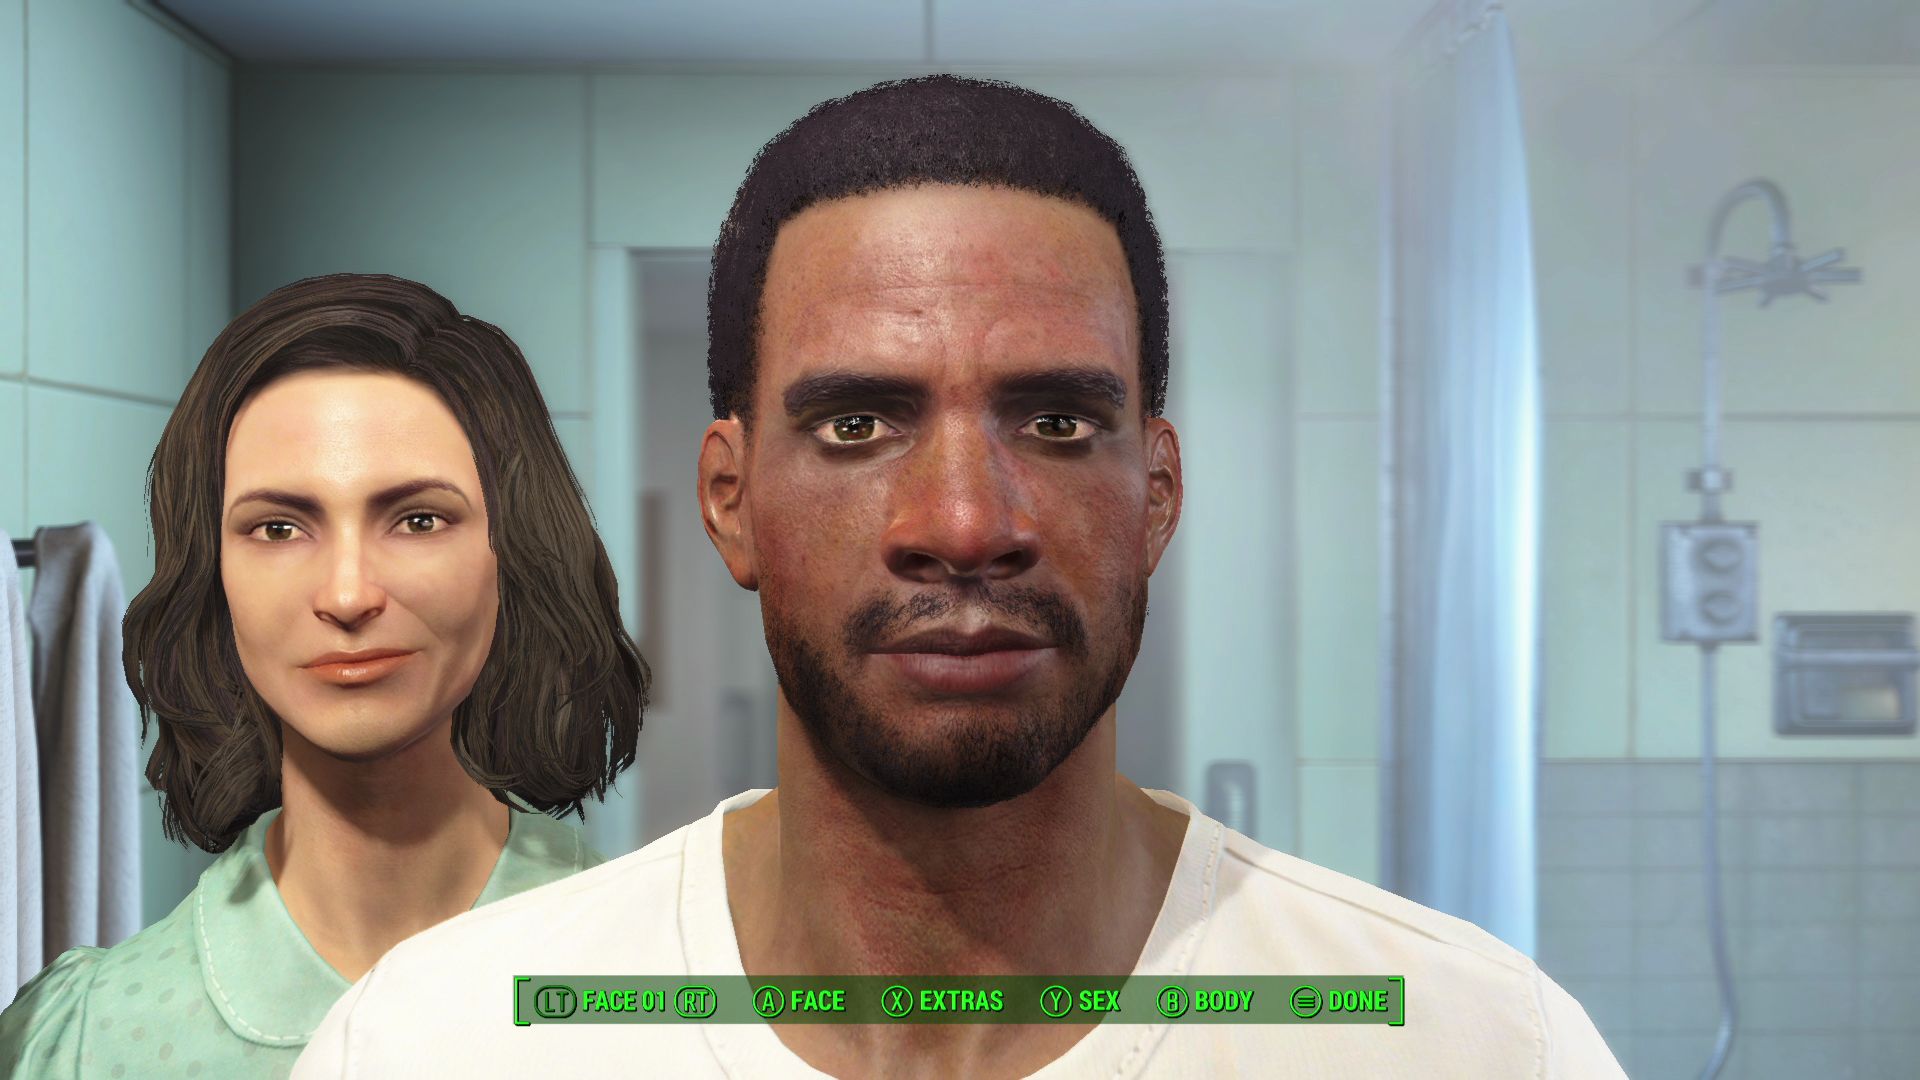 Fallout4_E3_FaceCreation2_1434323967